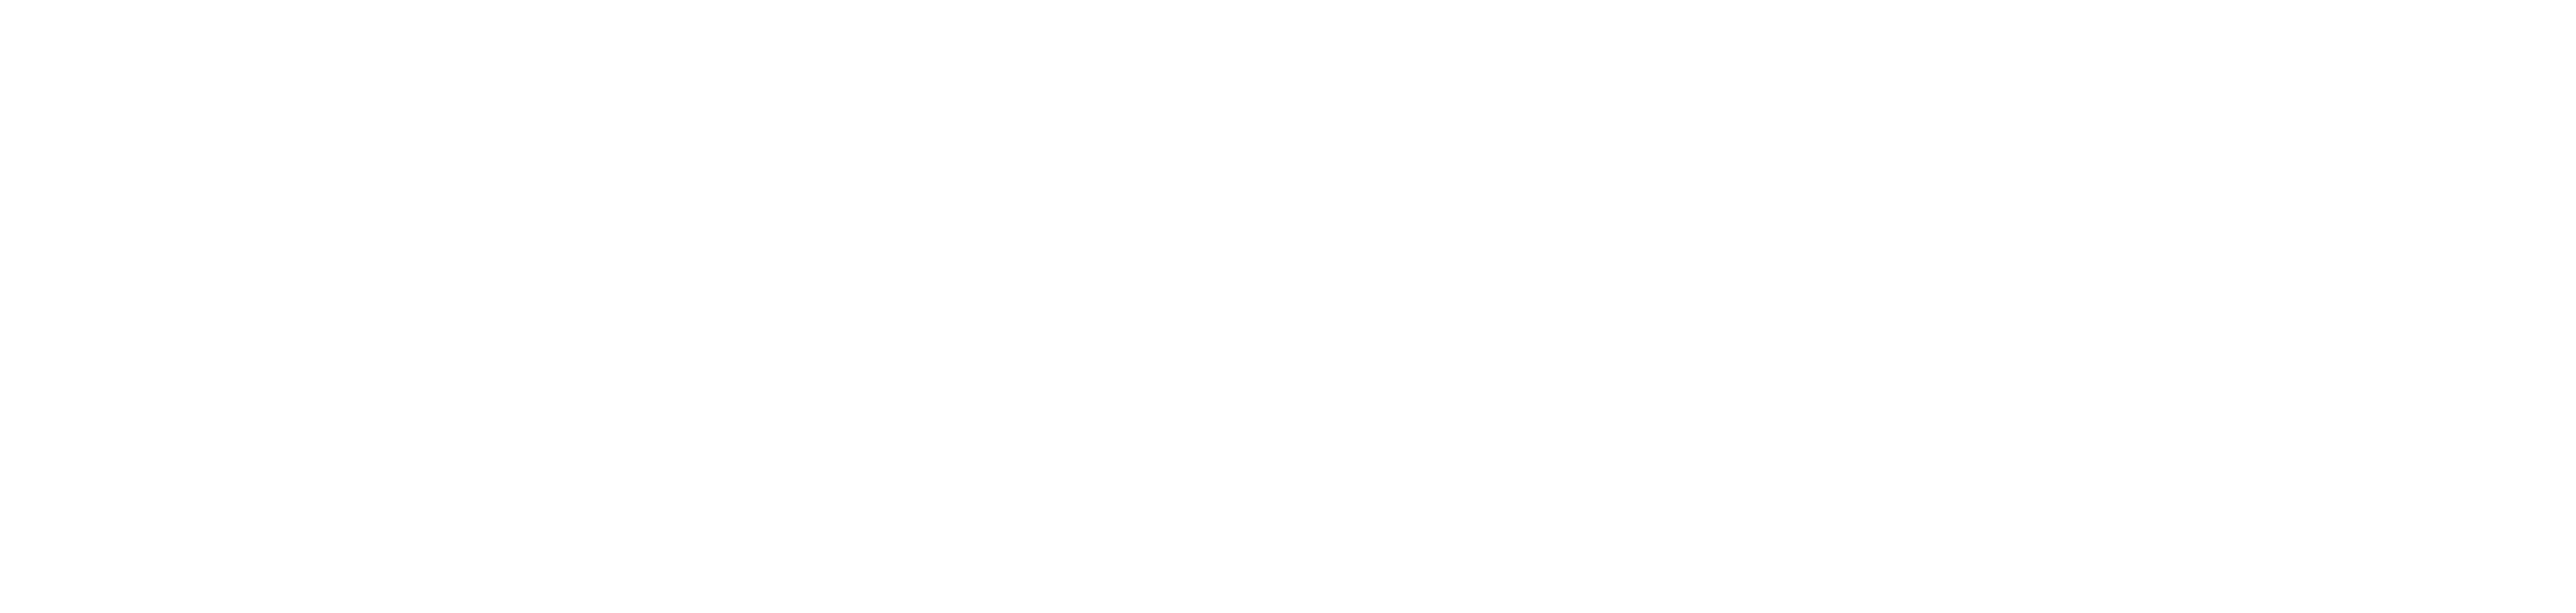 Yourhomehub Logo